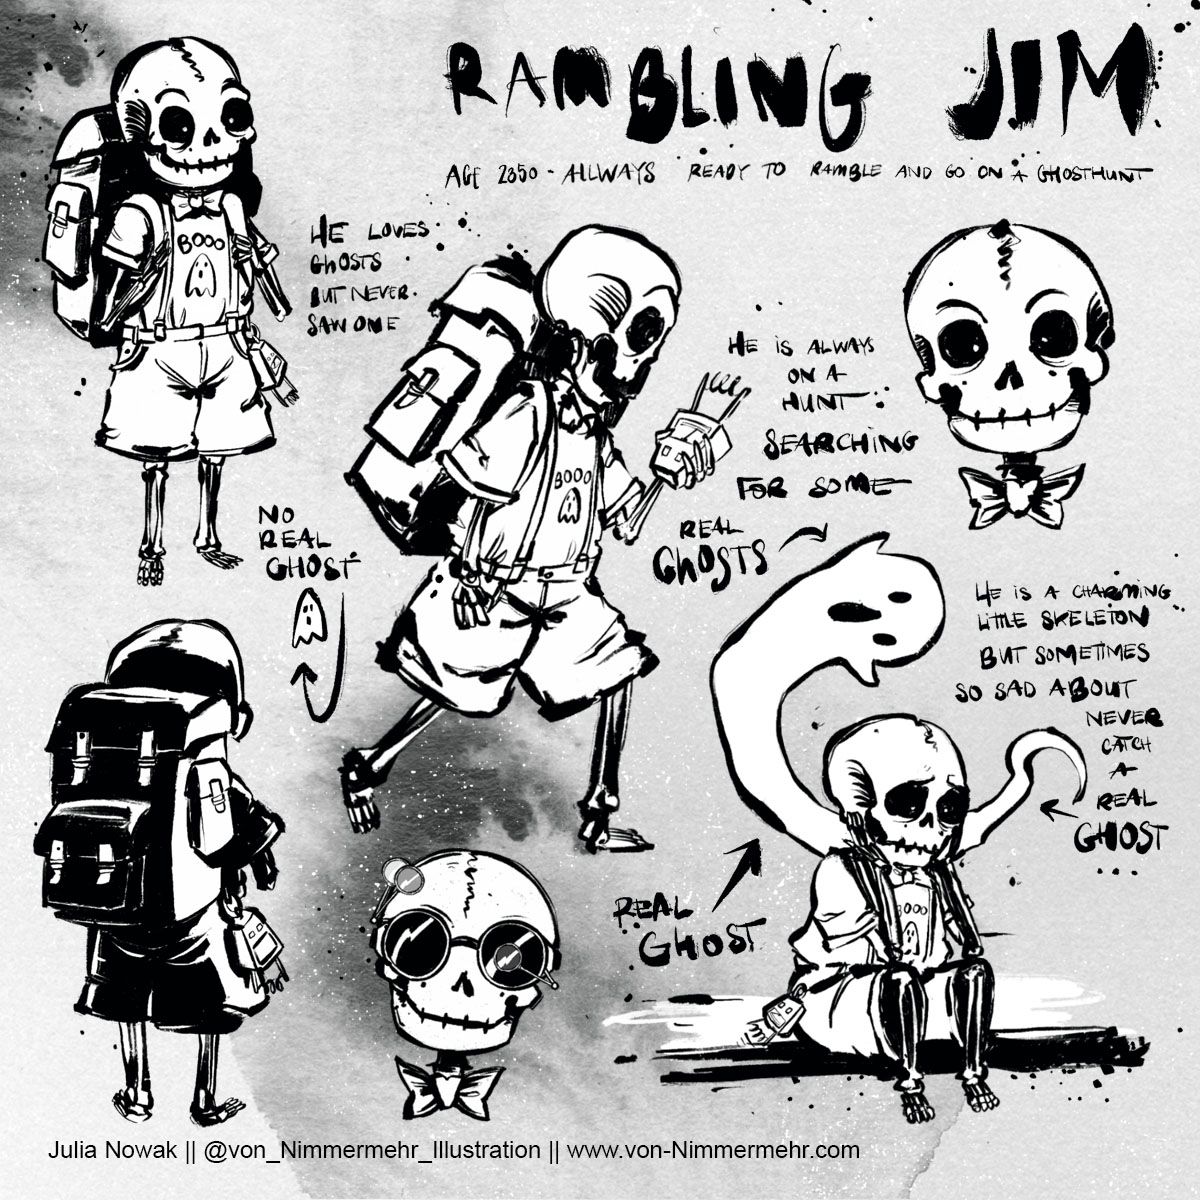 Rambling_Jim.jpg